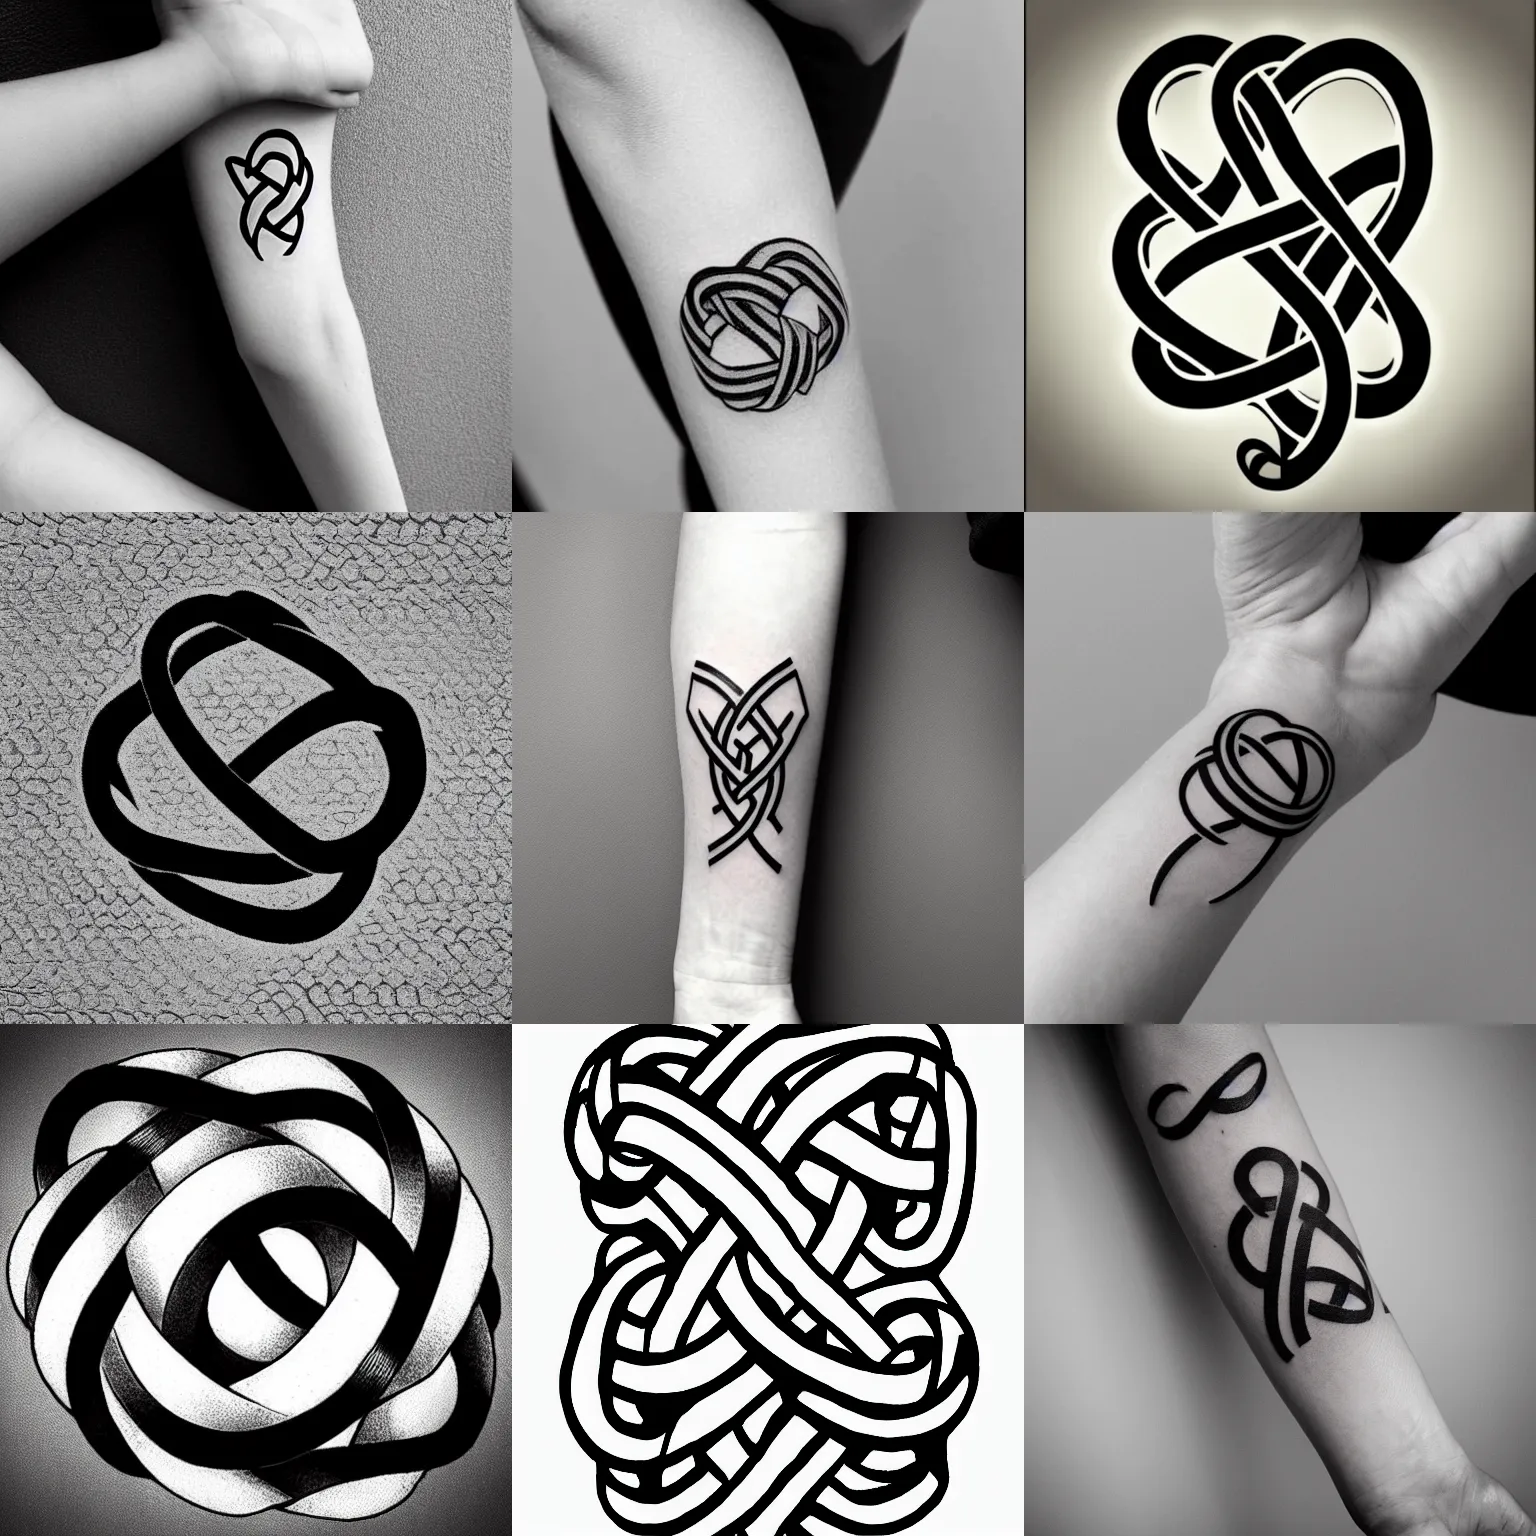 File:Celtic knot tattoo.jpg - Wikimedia Commons